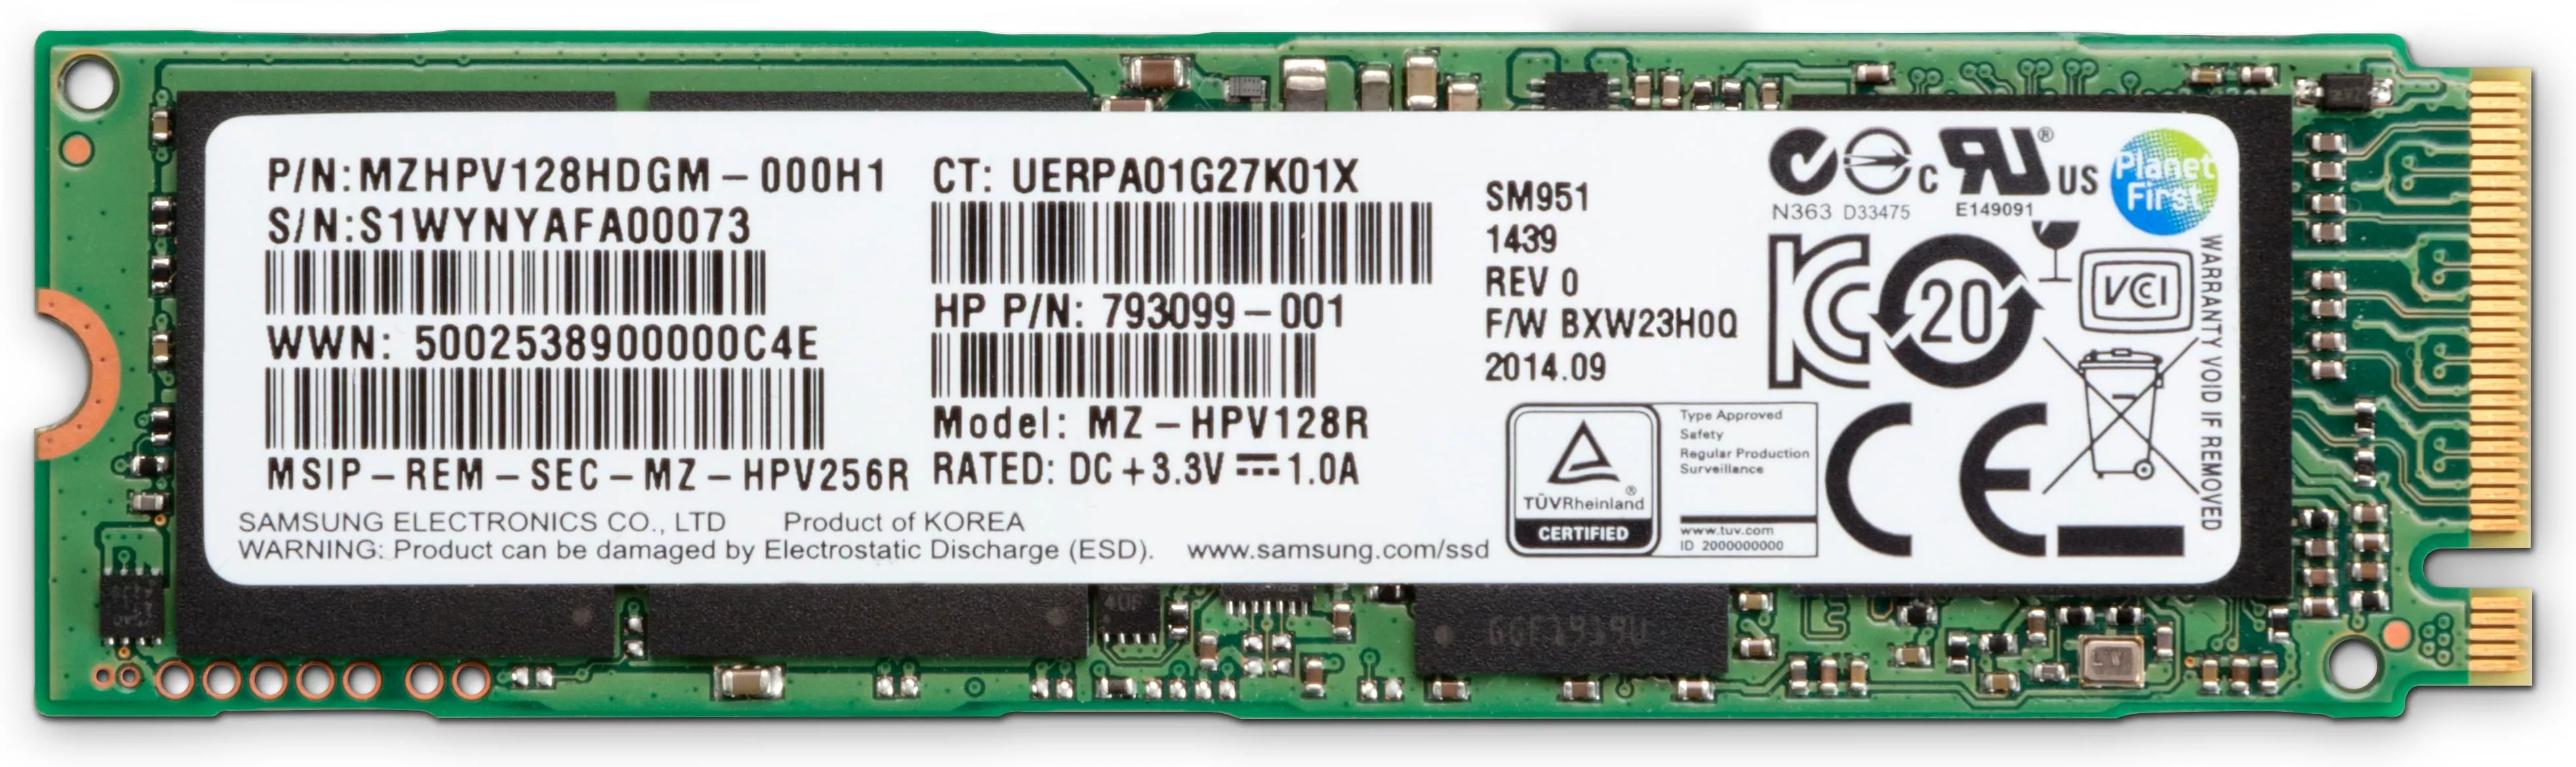 Achat HP Disque SSD NVME 2260 M.2 PCI-E 3 x 4 de 1 To - 0889899804506